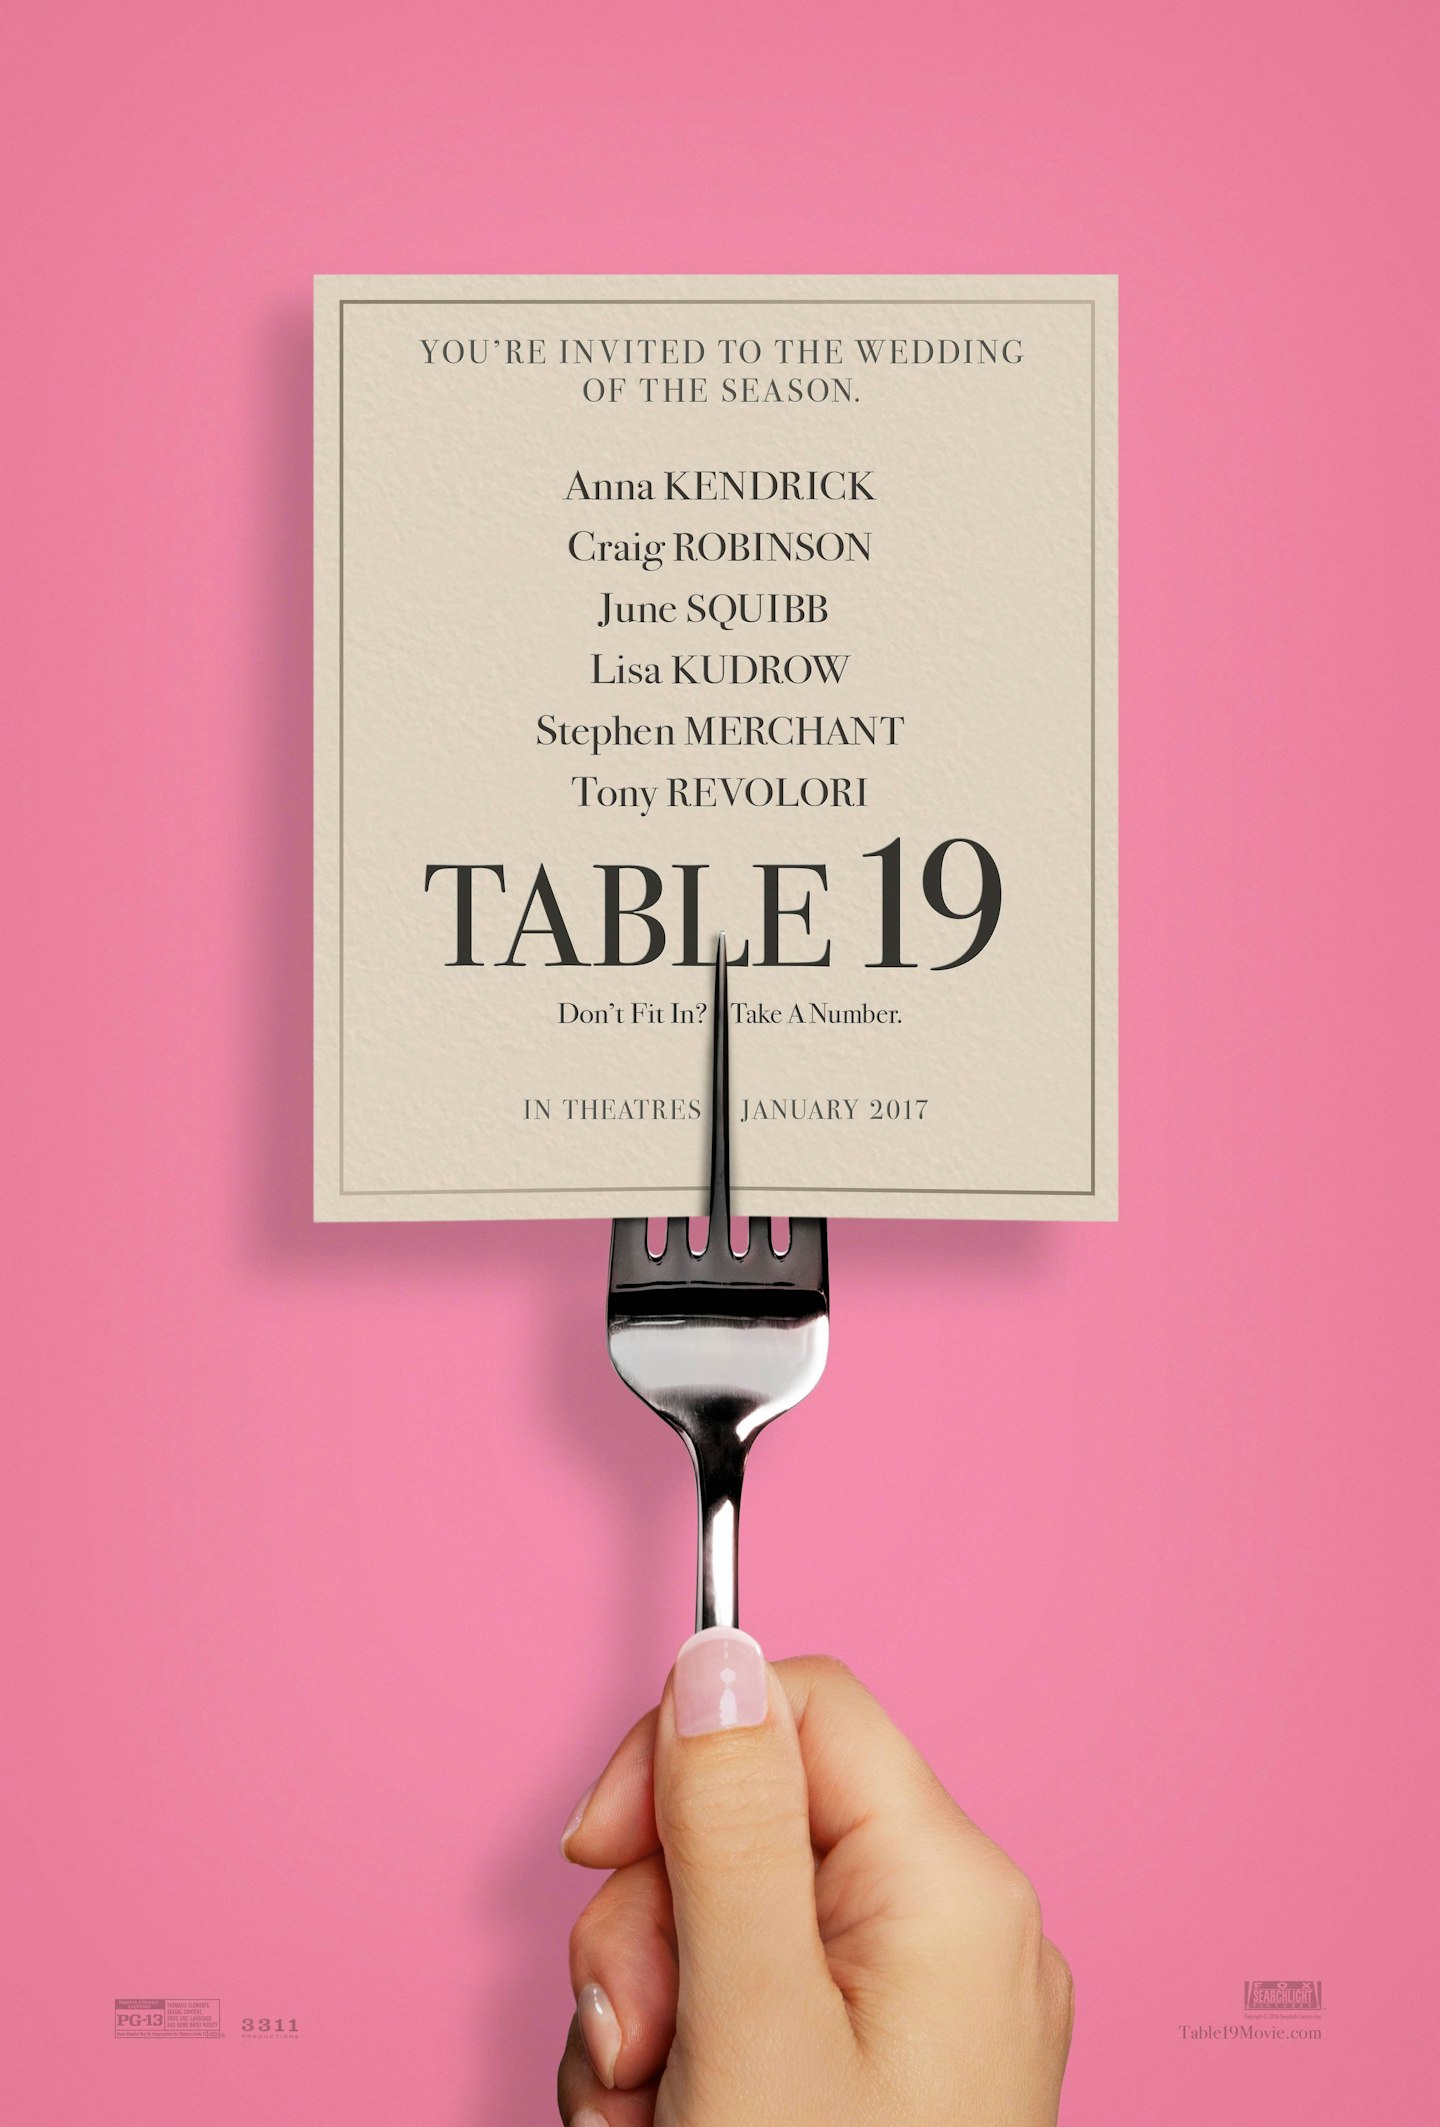 Table 19 teaser poster